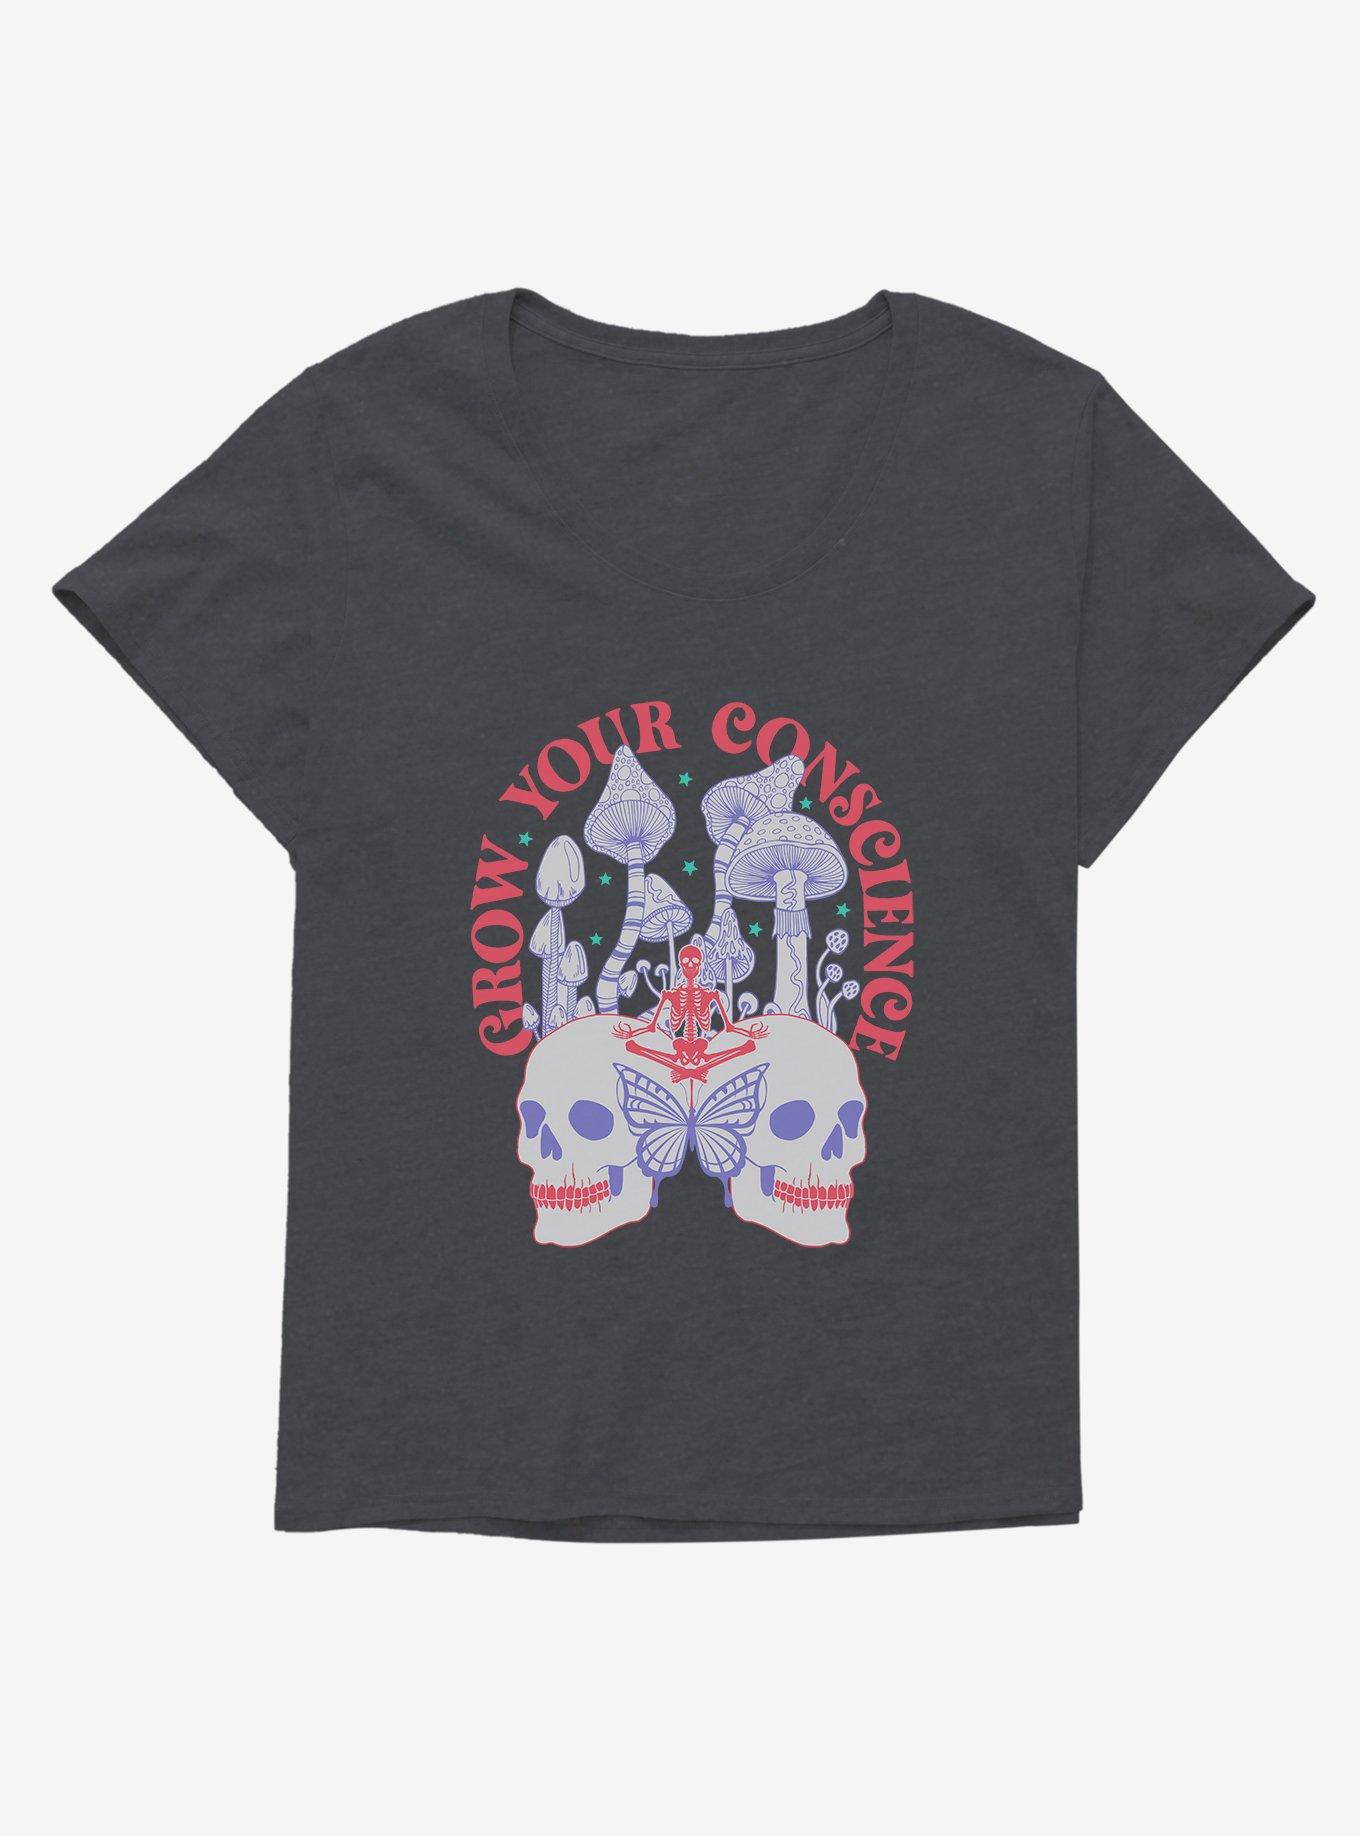 Grow Your Conscience Girls T-Shirt Plus